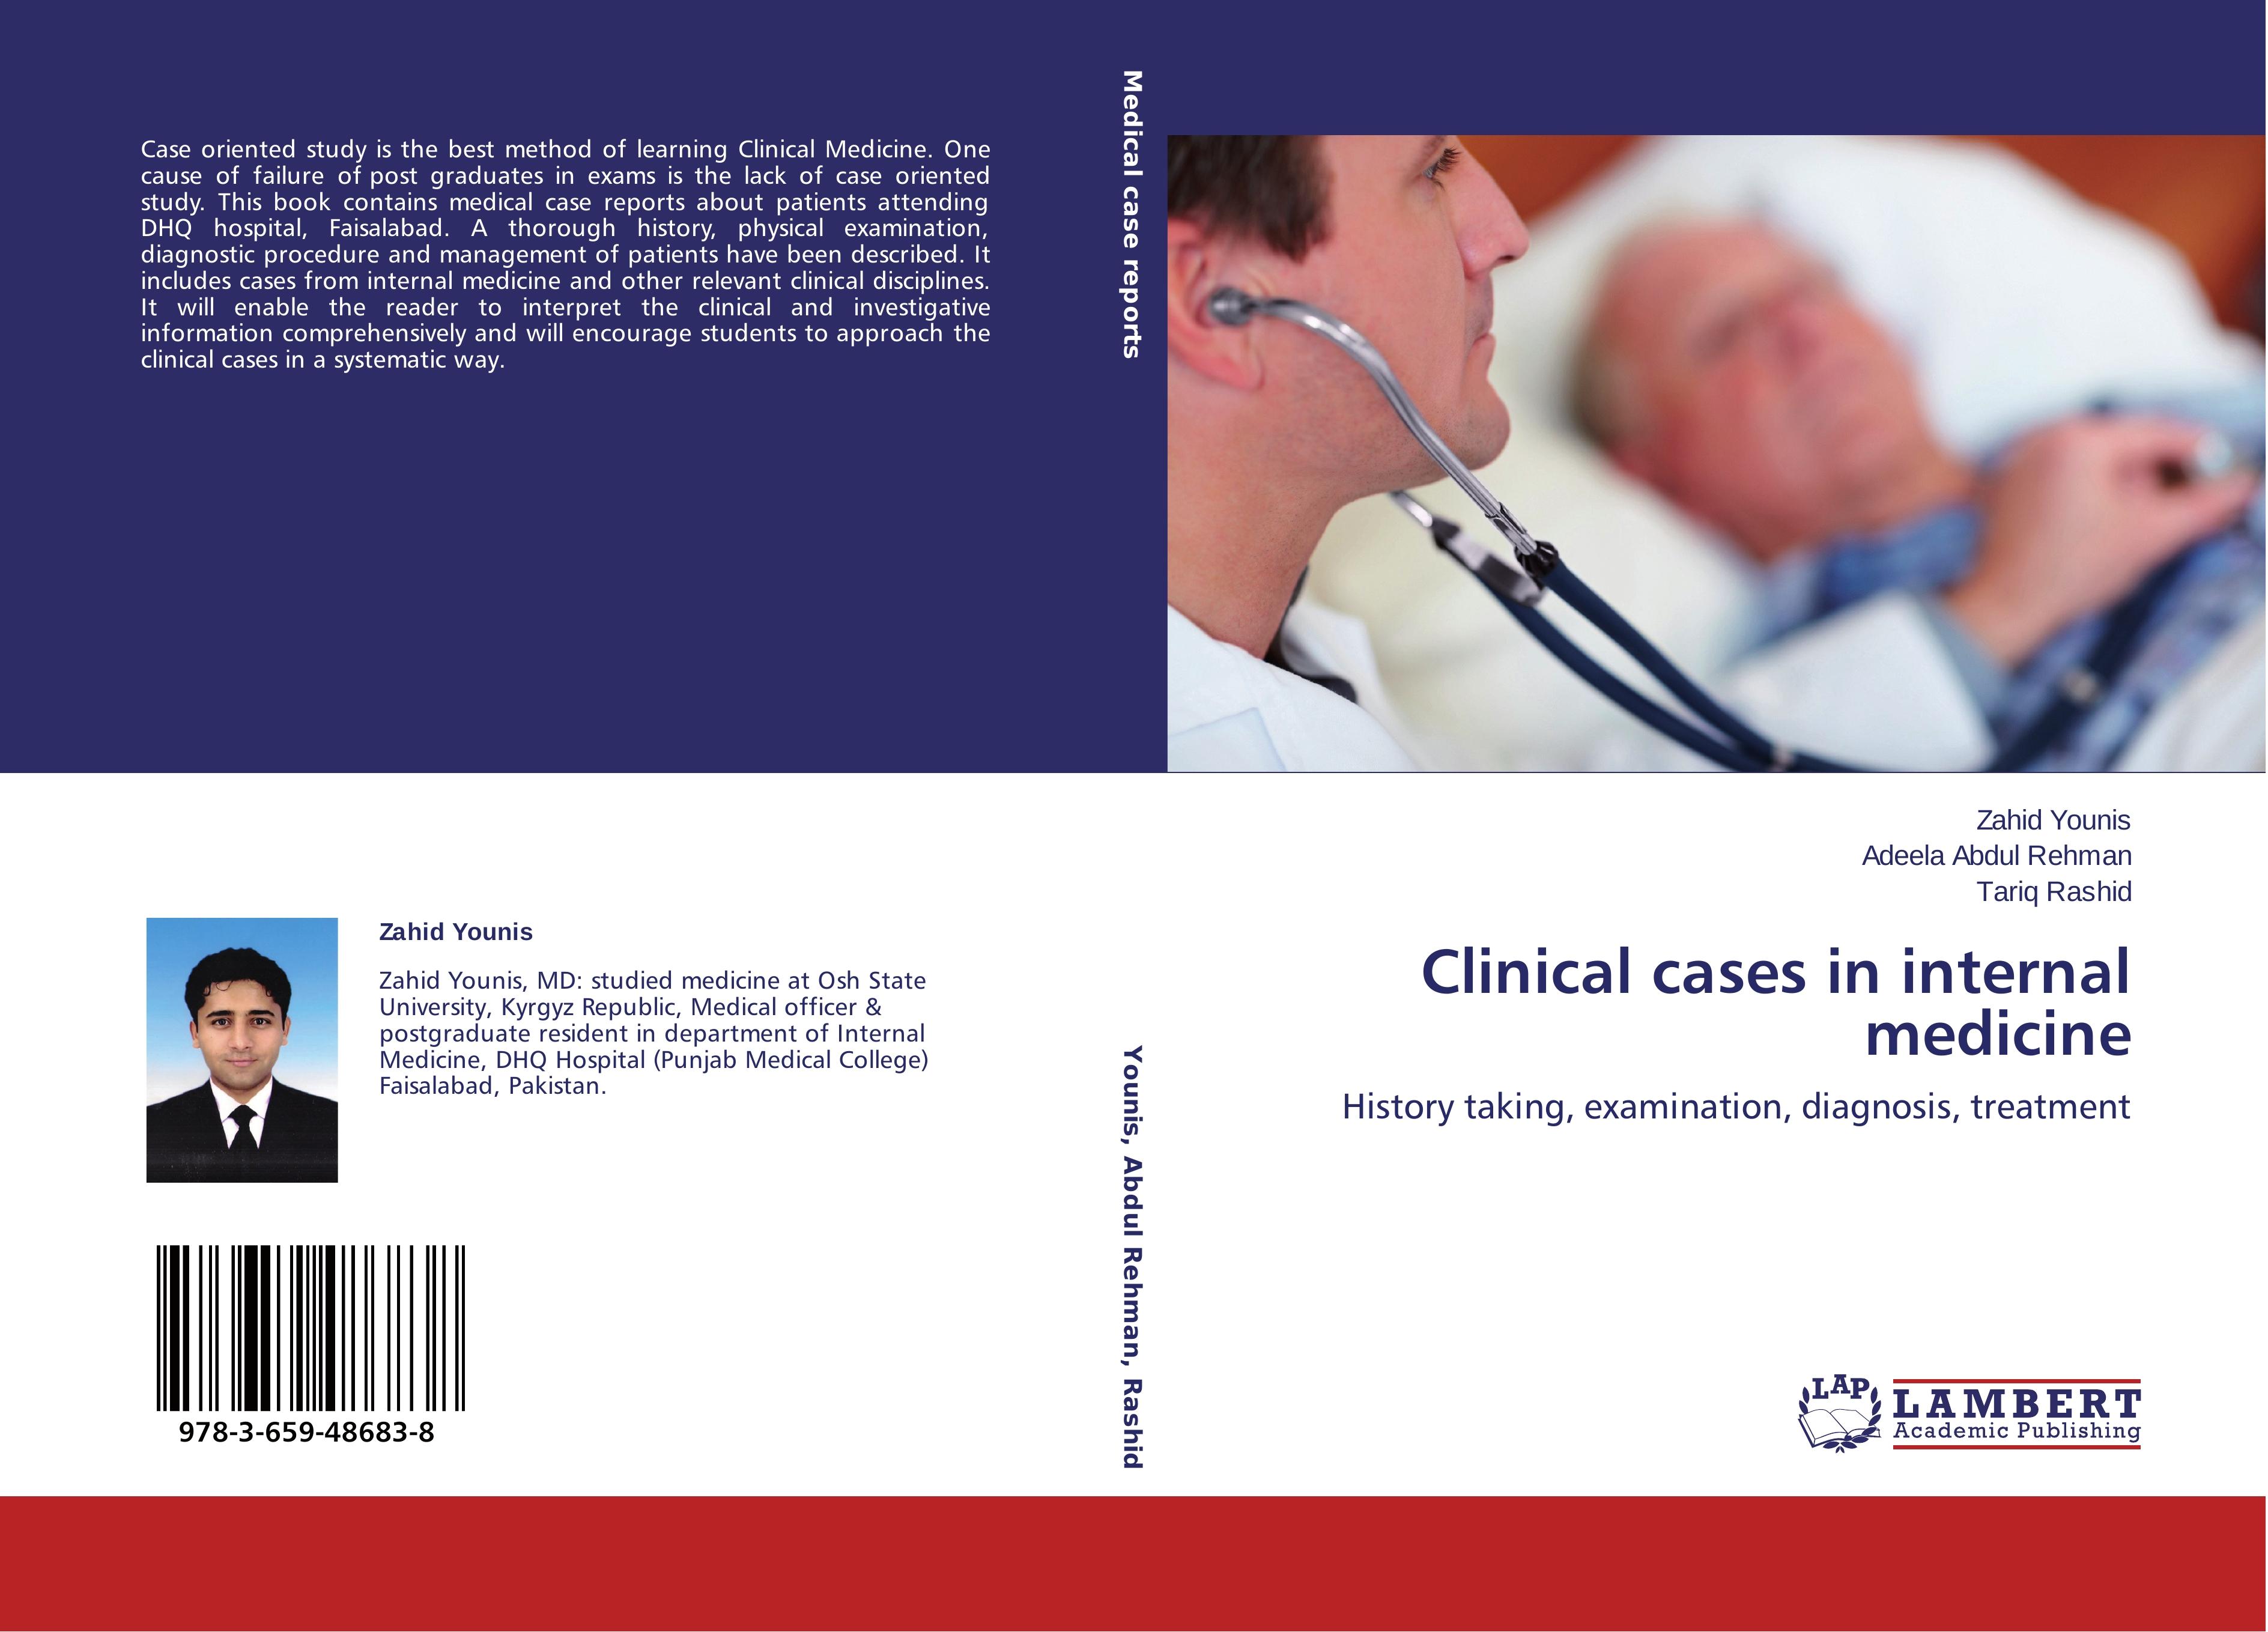 Clinical cases in internal medicine - Zahid Younis Adeela Abdul Rehman Tariq Rashid